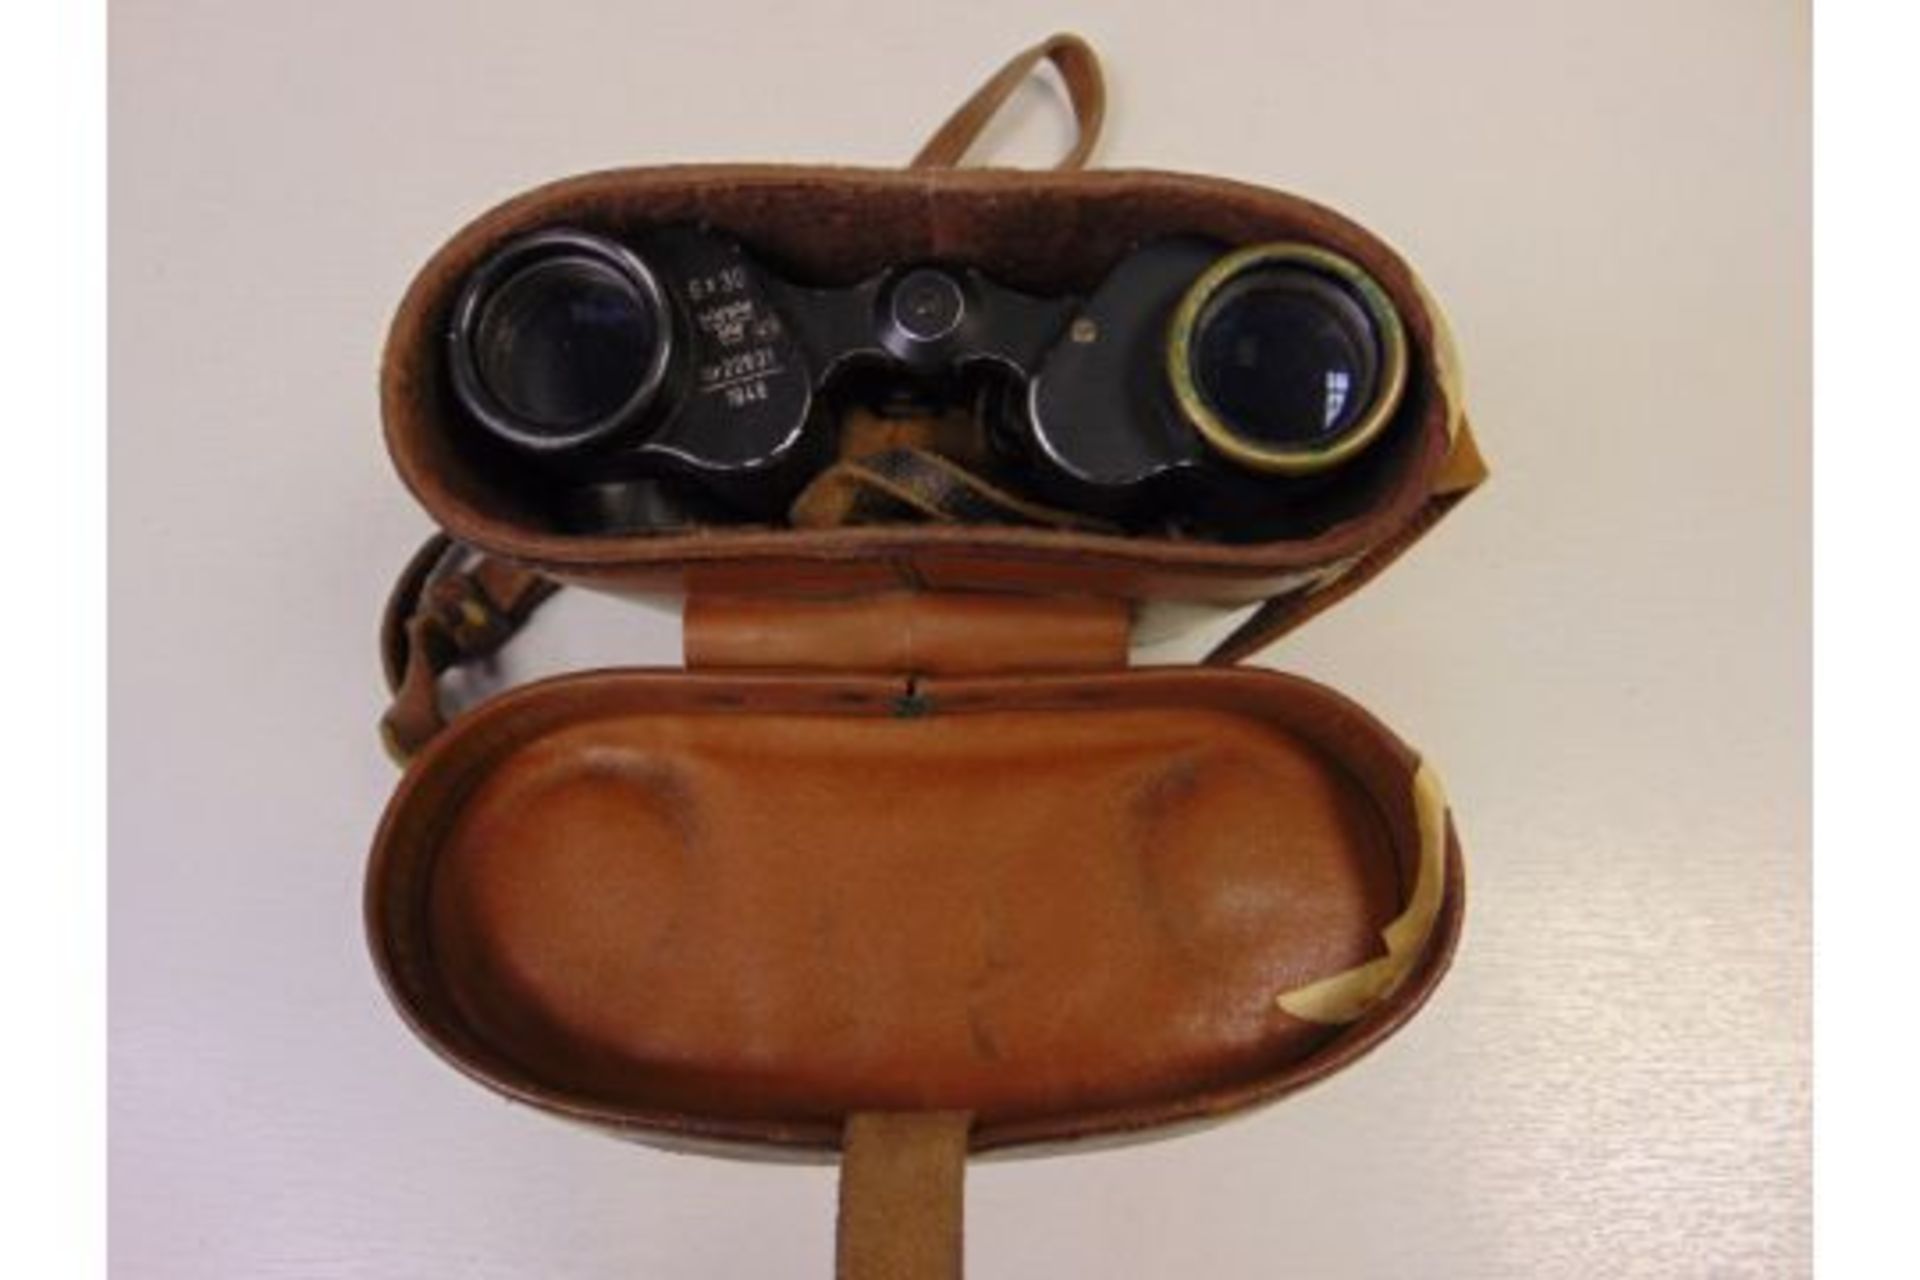 NIFE 6 x 30 Binoculars in Original Leather Case dated 1948 - Image 2 of 9